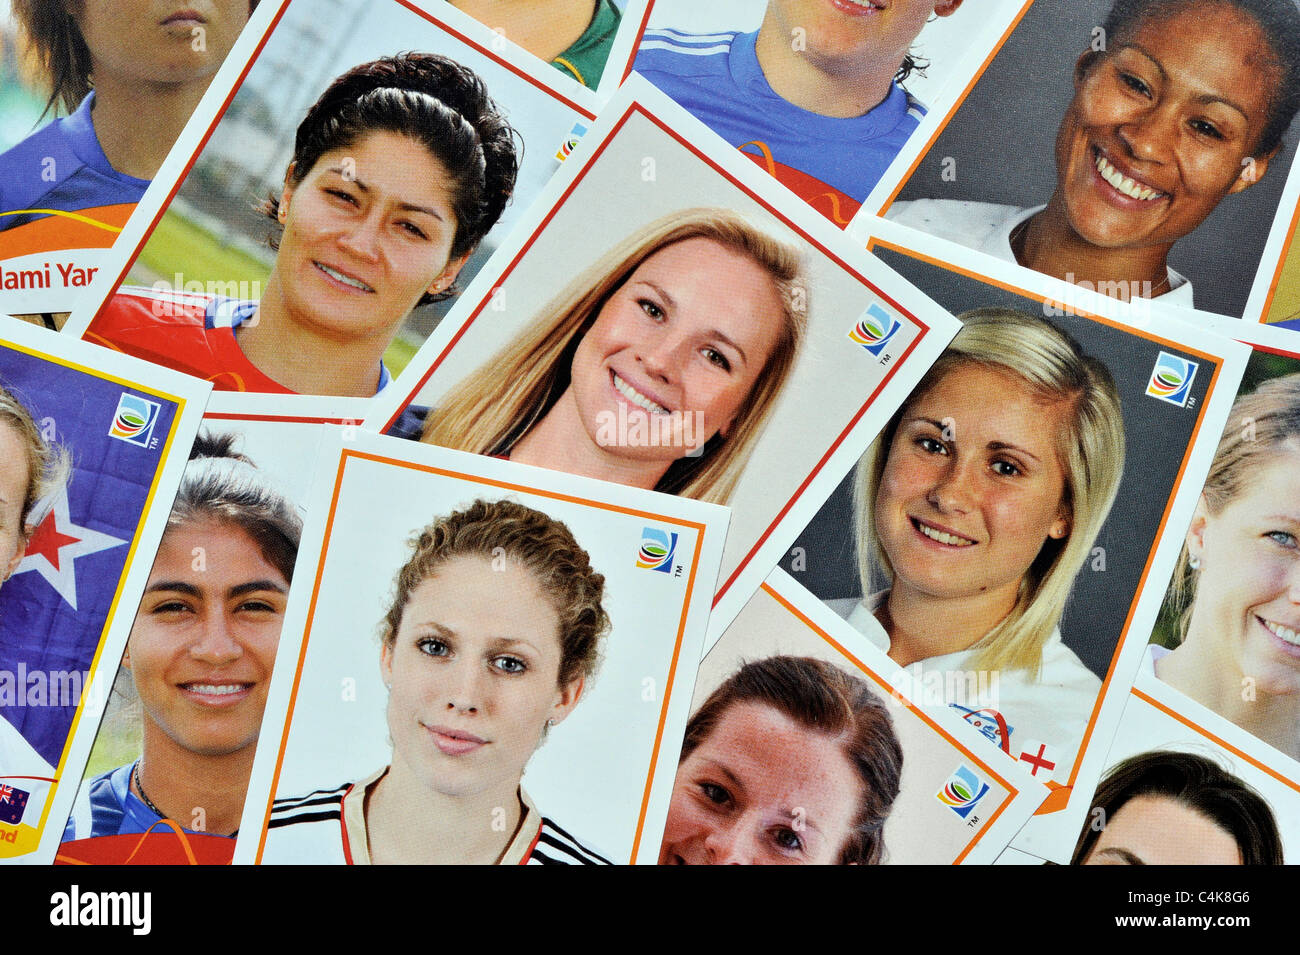 women's world cup panini football stickers Stock Photo